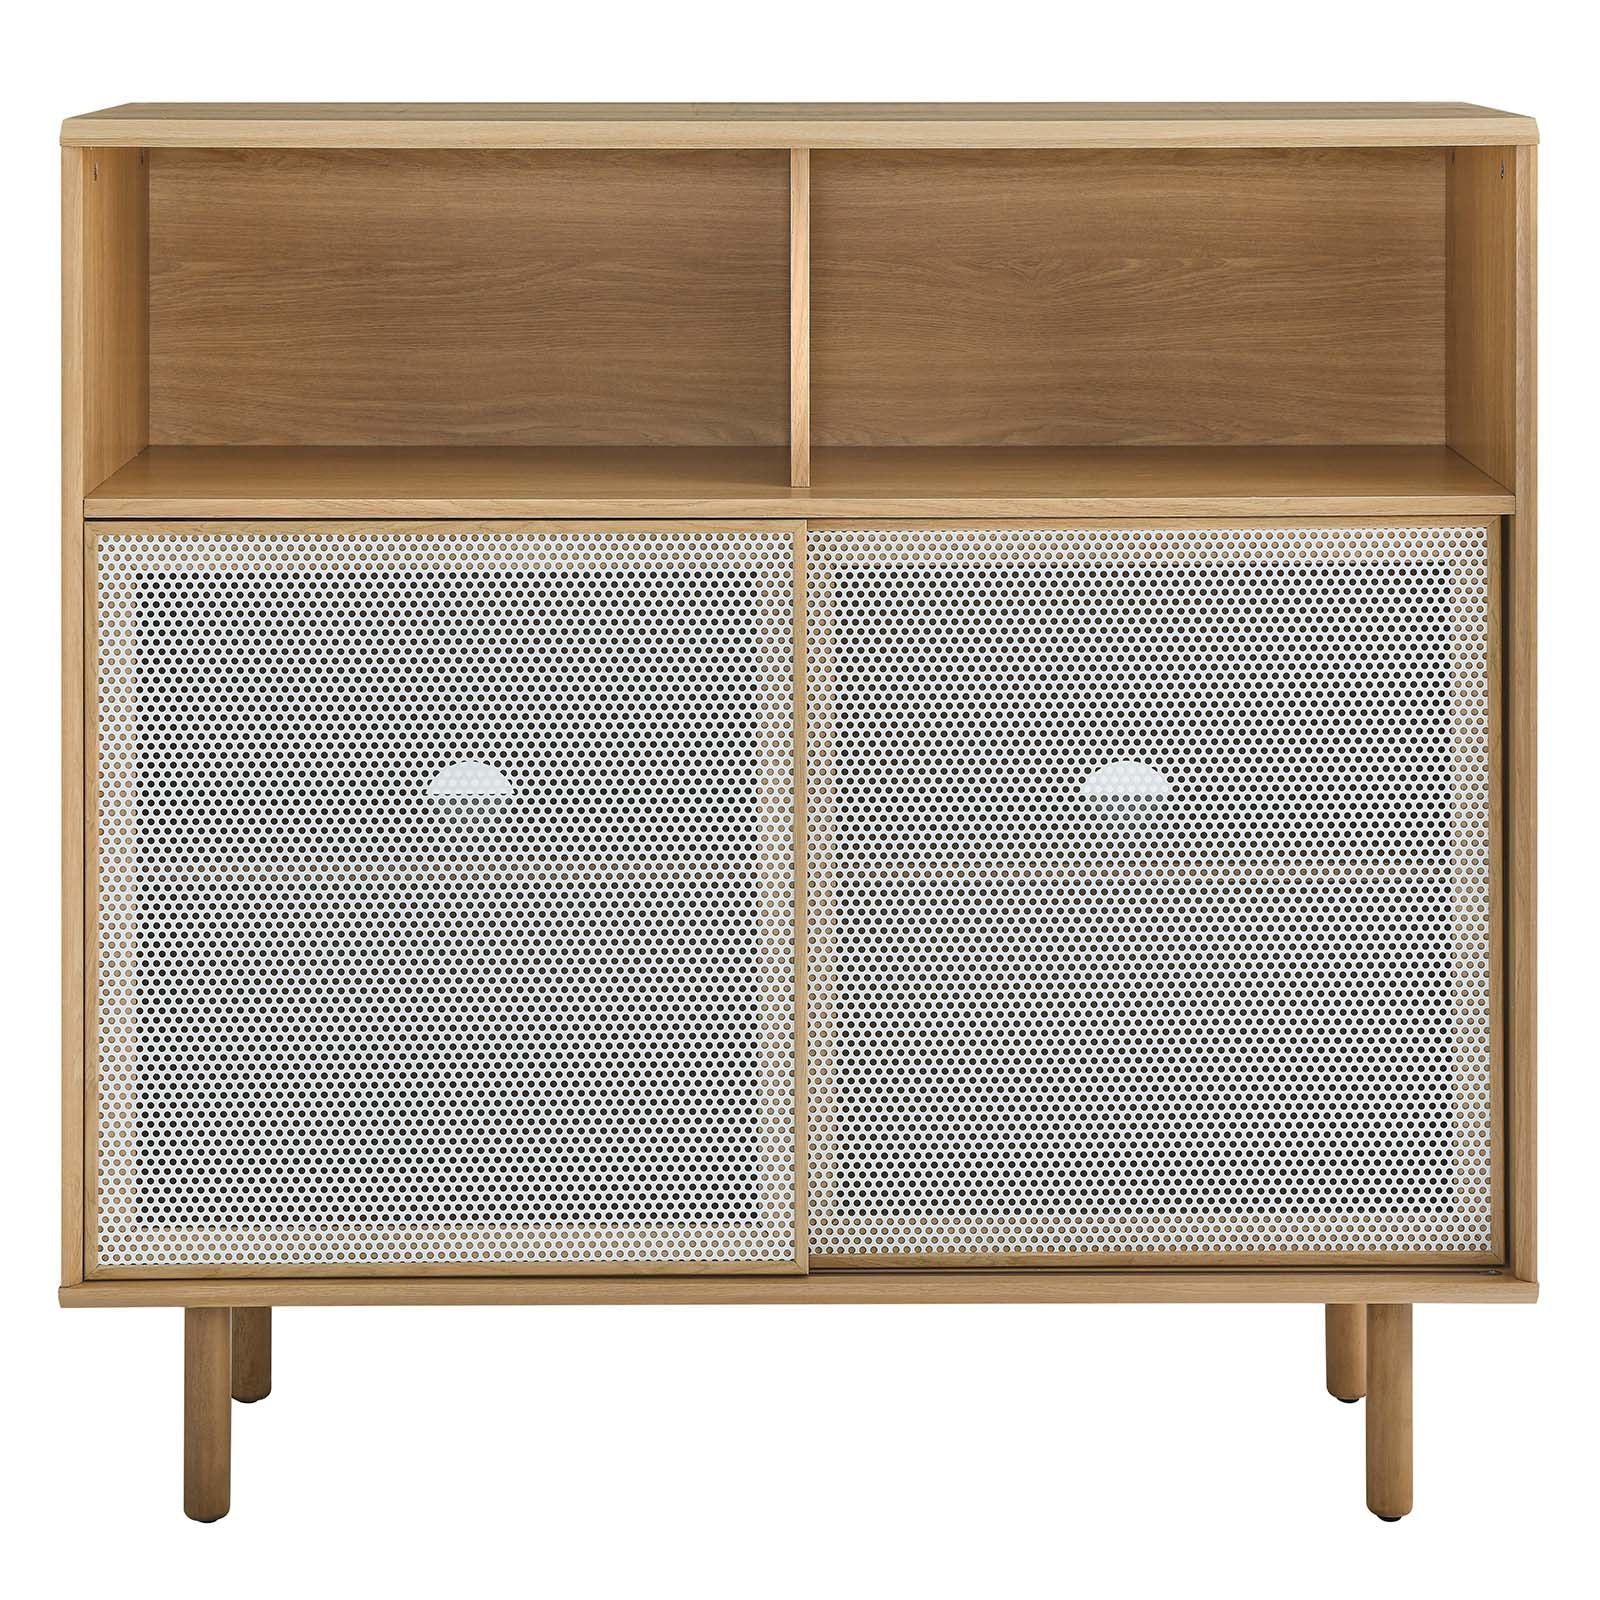 Kurtis 47" Display Cabinet - East Shore Modern Home Furnishings